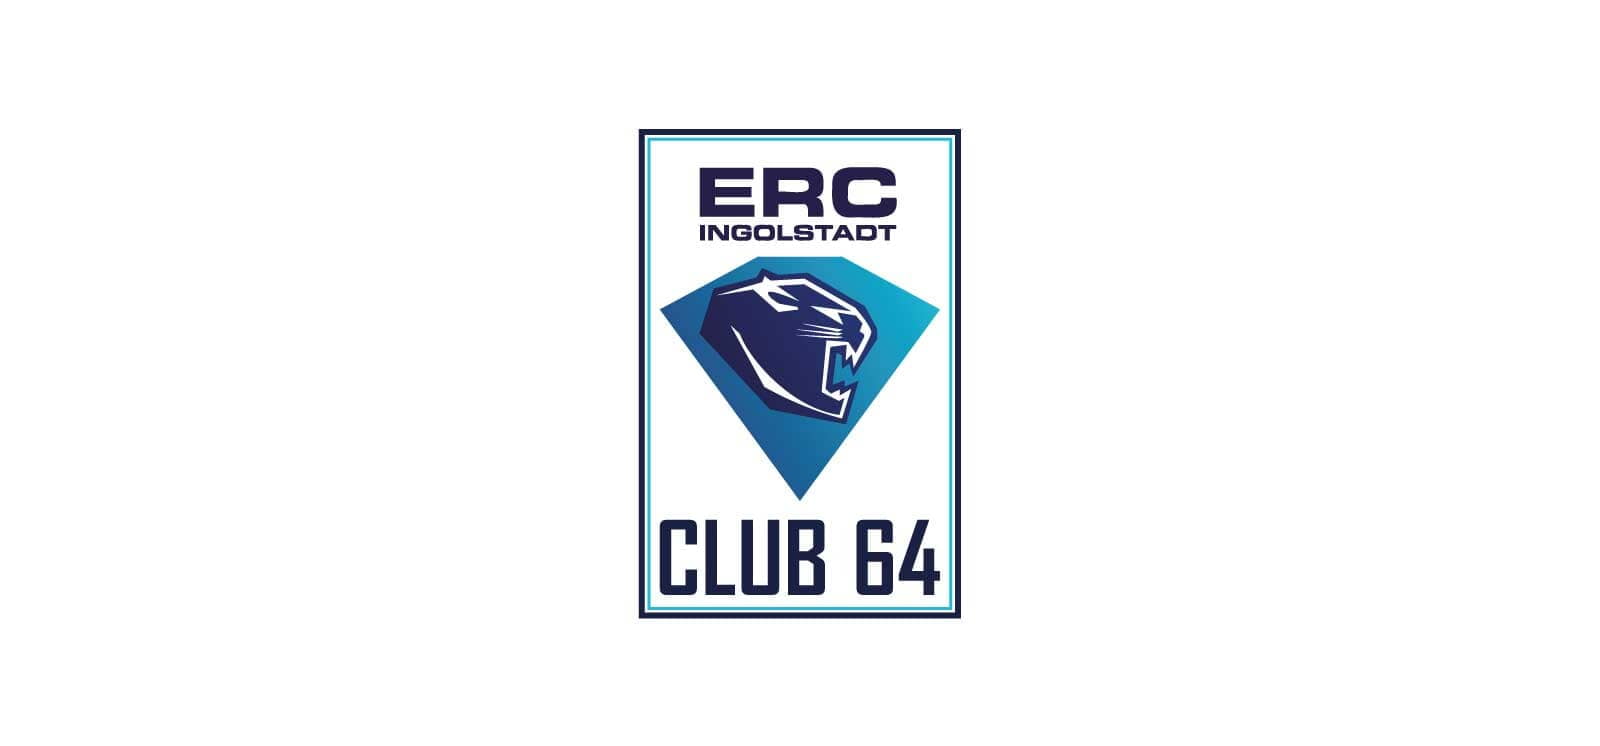 ERC Ingolstadt Club 64